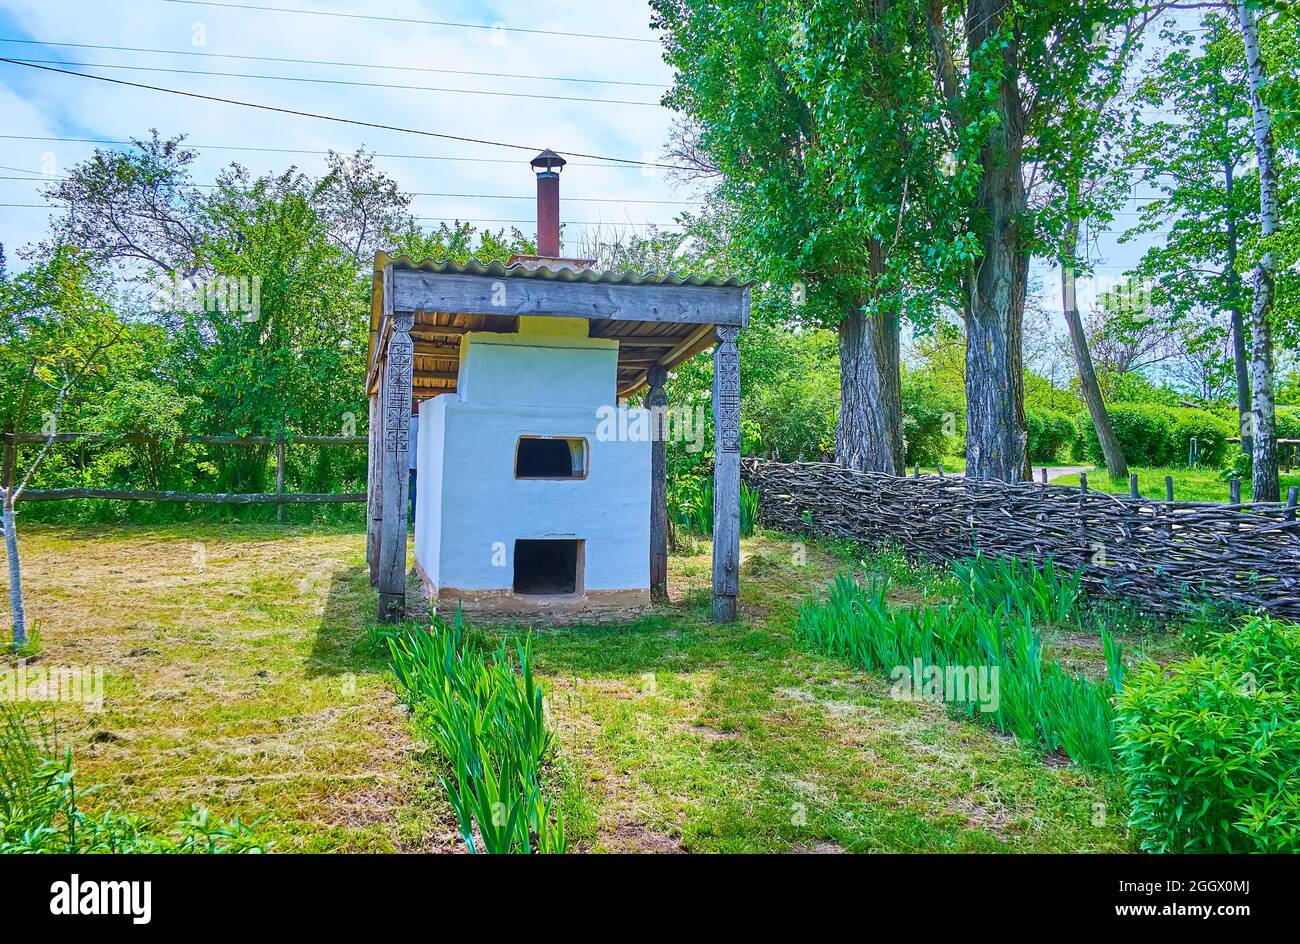 The outdoor adobe stove, located in yard of the farmstead, Pereiaslav Scansen, Pereiaslav, Ukraine Stock Photo